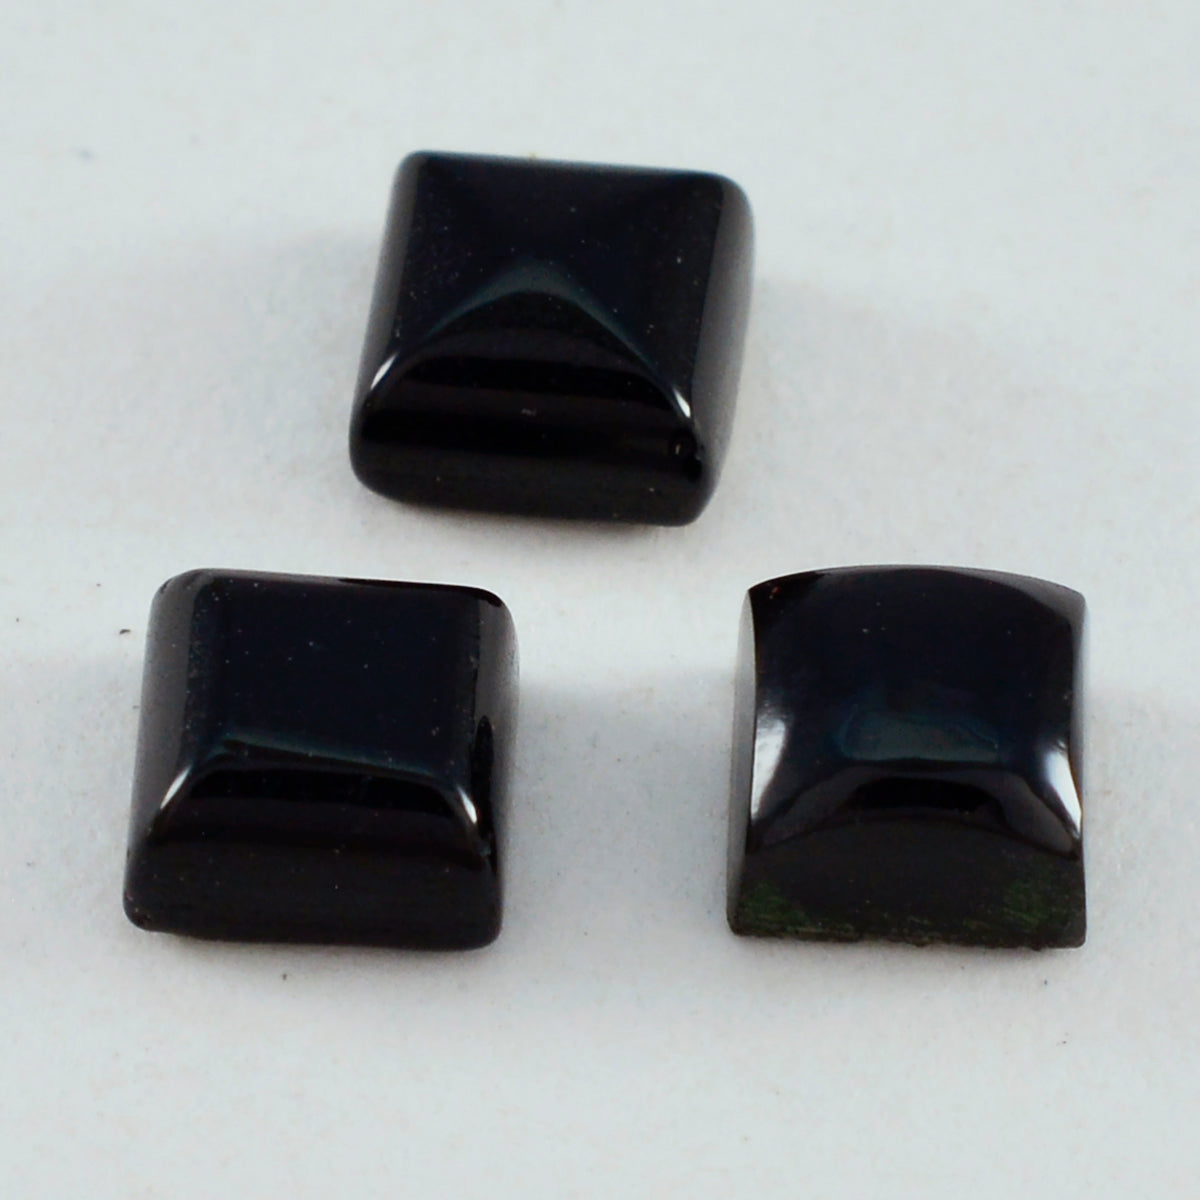 Riyogems 1PC Black Onyx Cabochon 10x10 mm vierkante vorm verrassende kwaliteit losse edelsteen